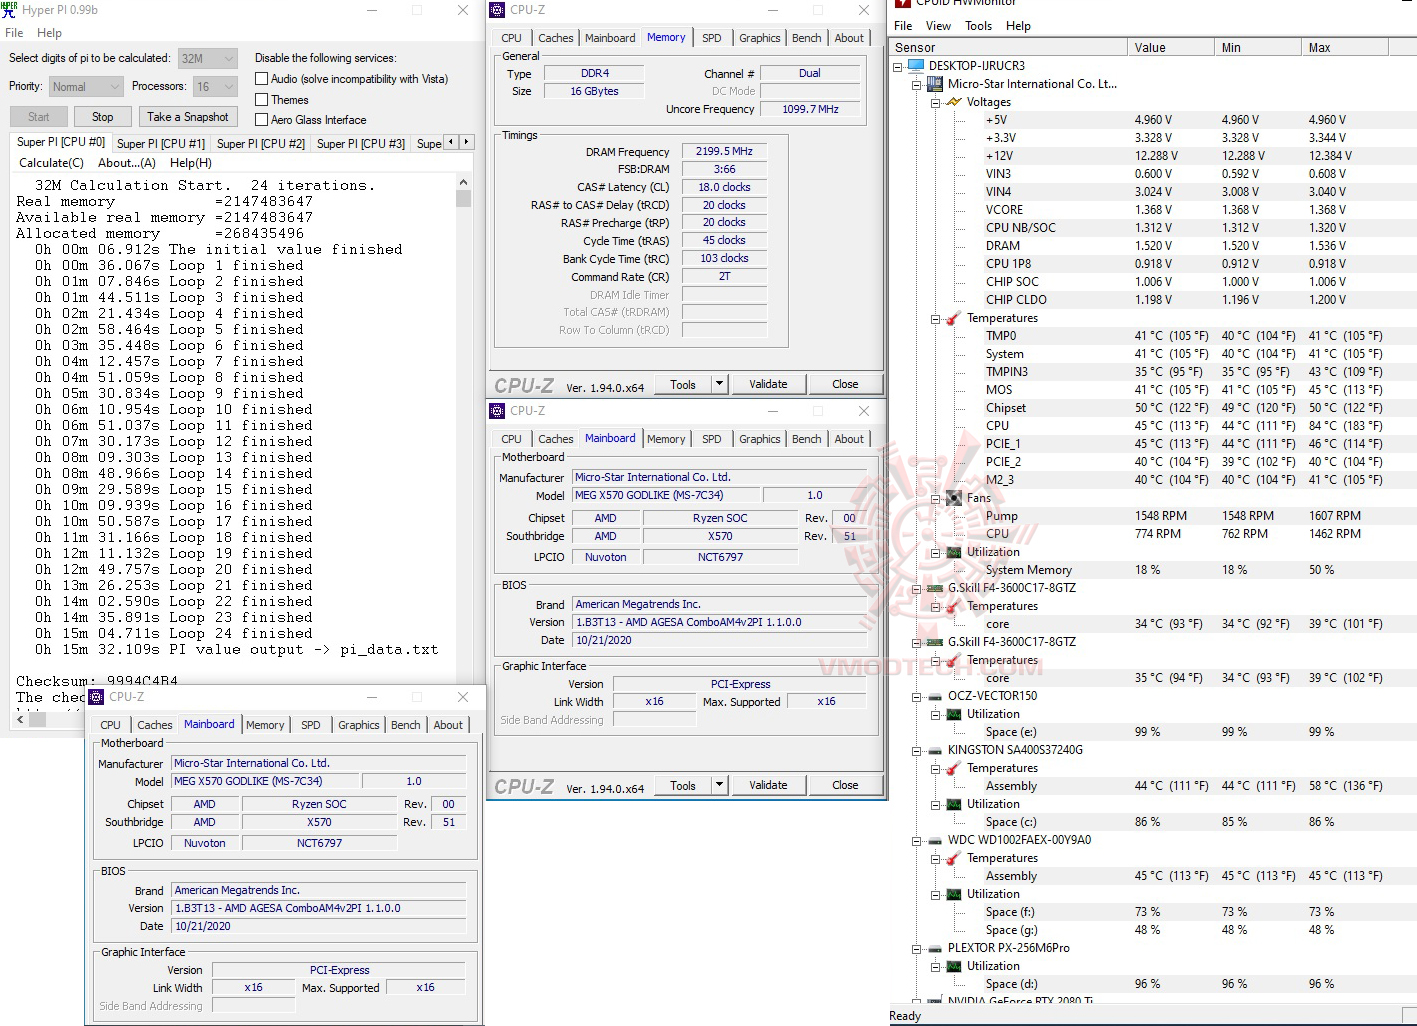 h32 oc AMD RYZEN 9 5900X PROCESSOR REVIEW